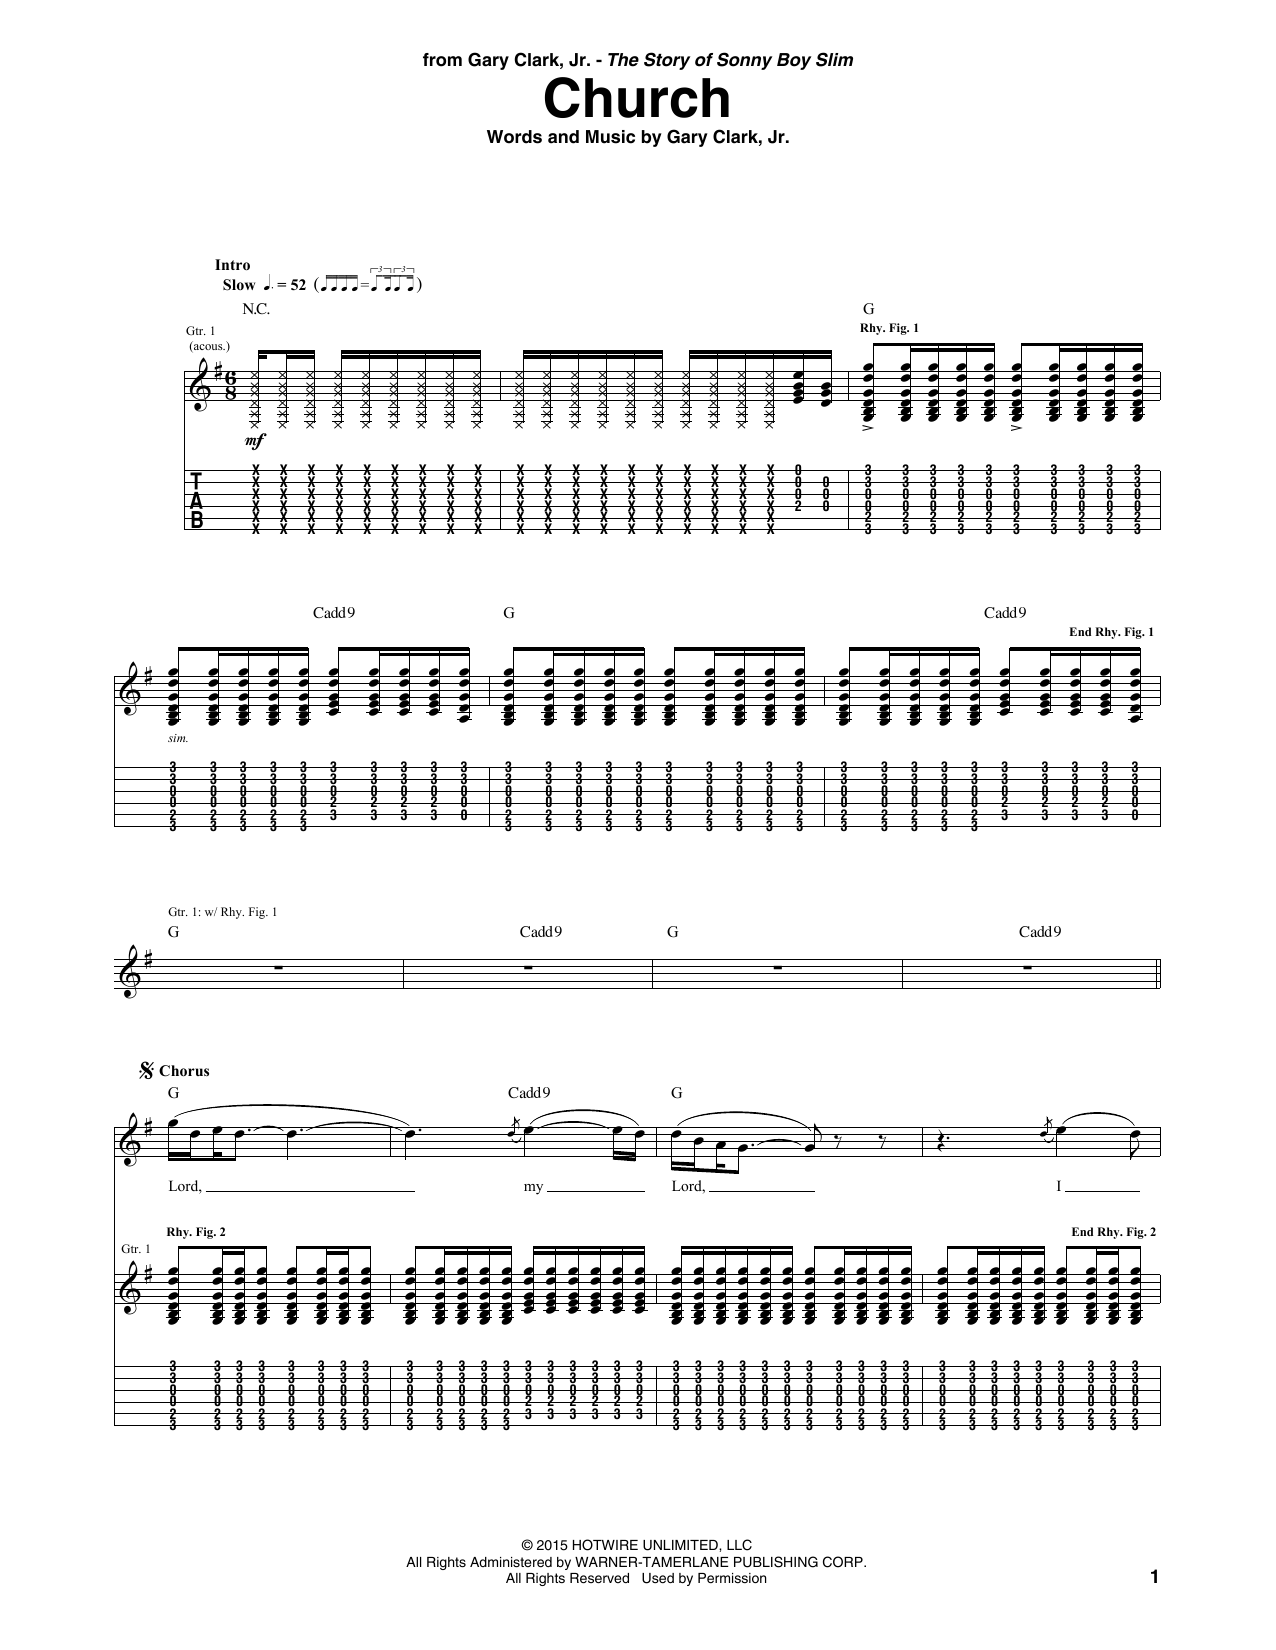 Gary Clark, Jr. Church Sheet Music Notes & Chords for Guitar Tab - Download or Print PDF